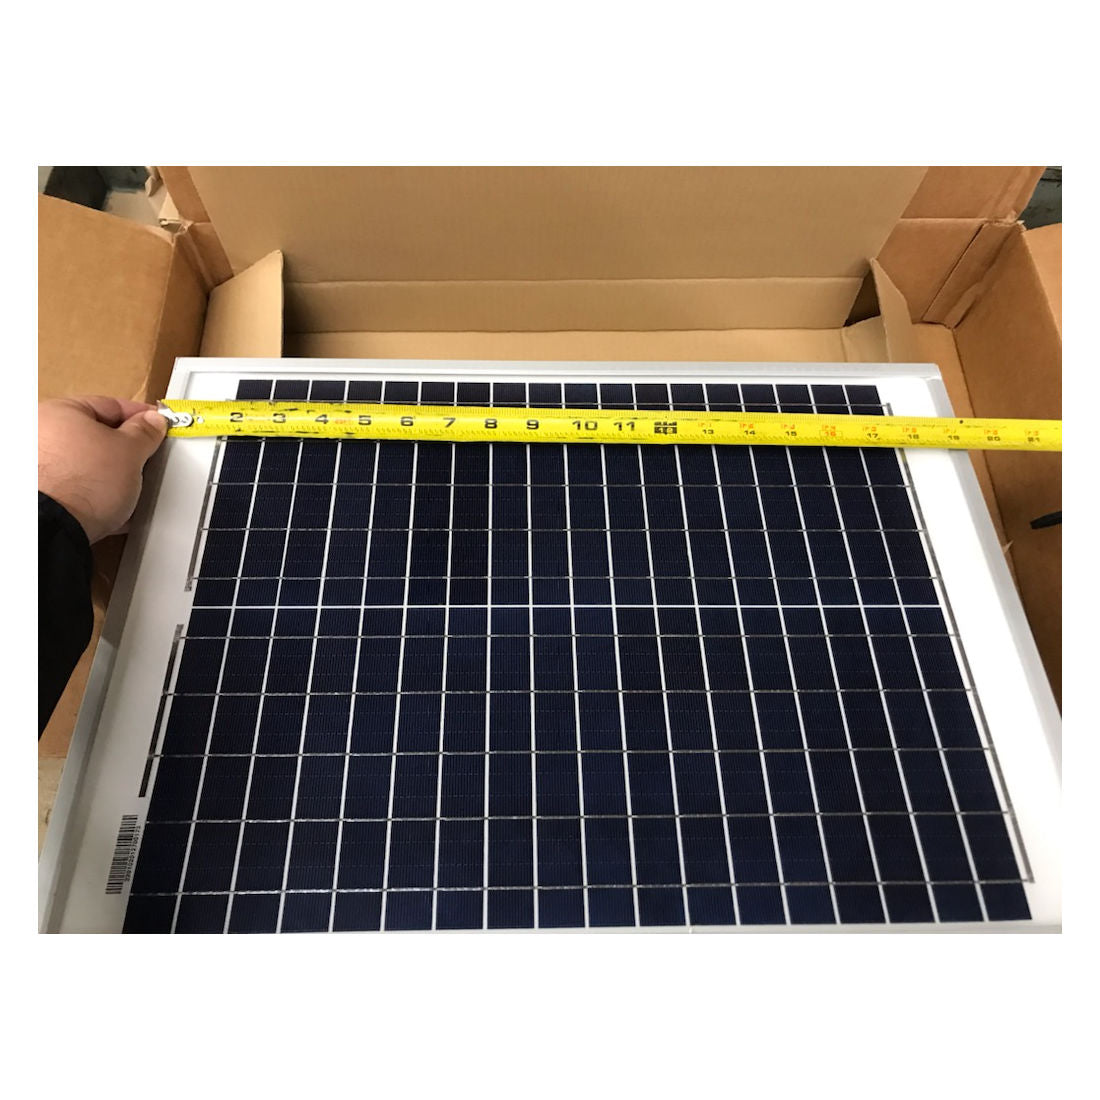 Elite 20w Solar Panel width measurements